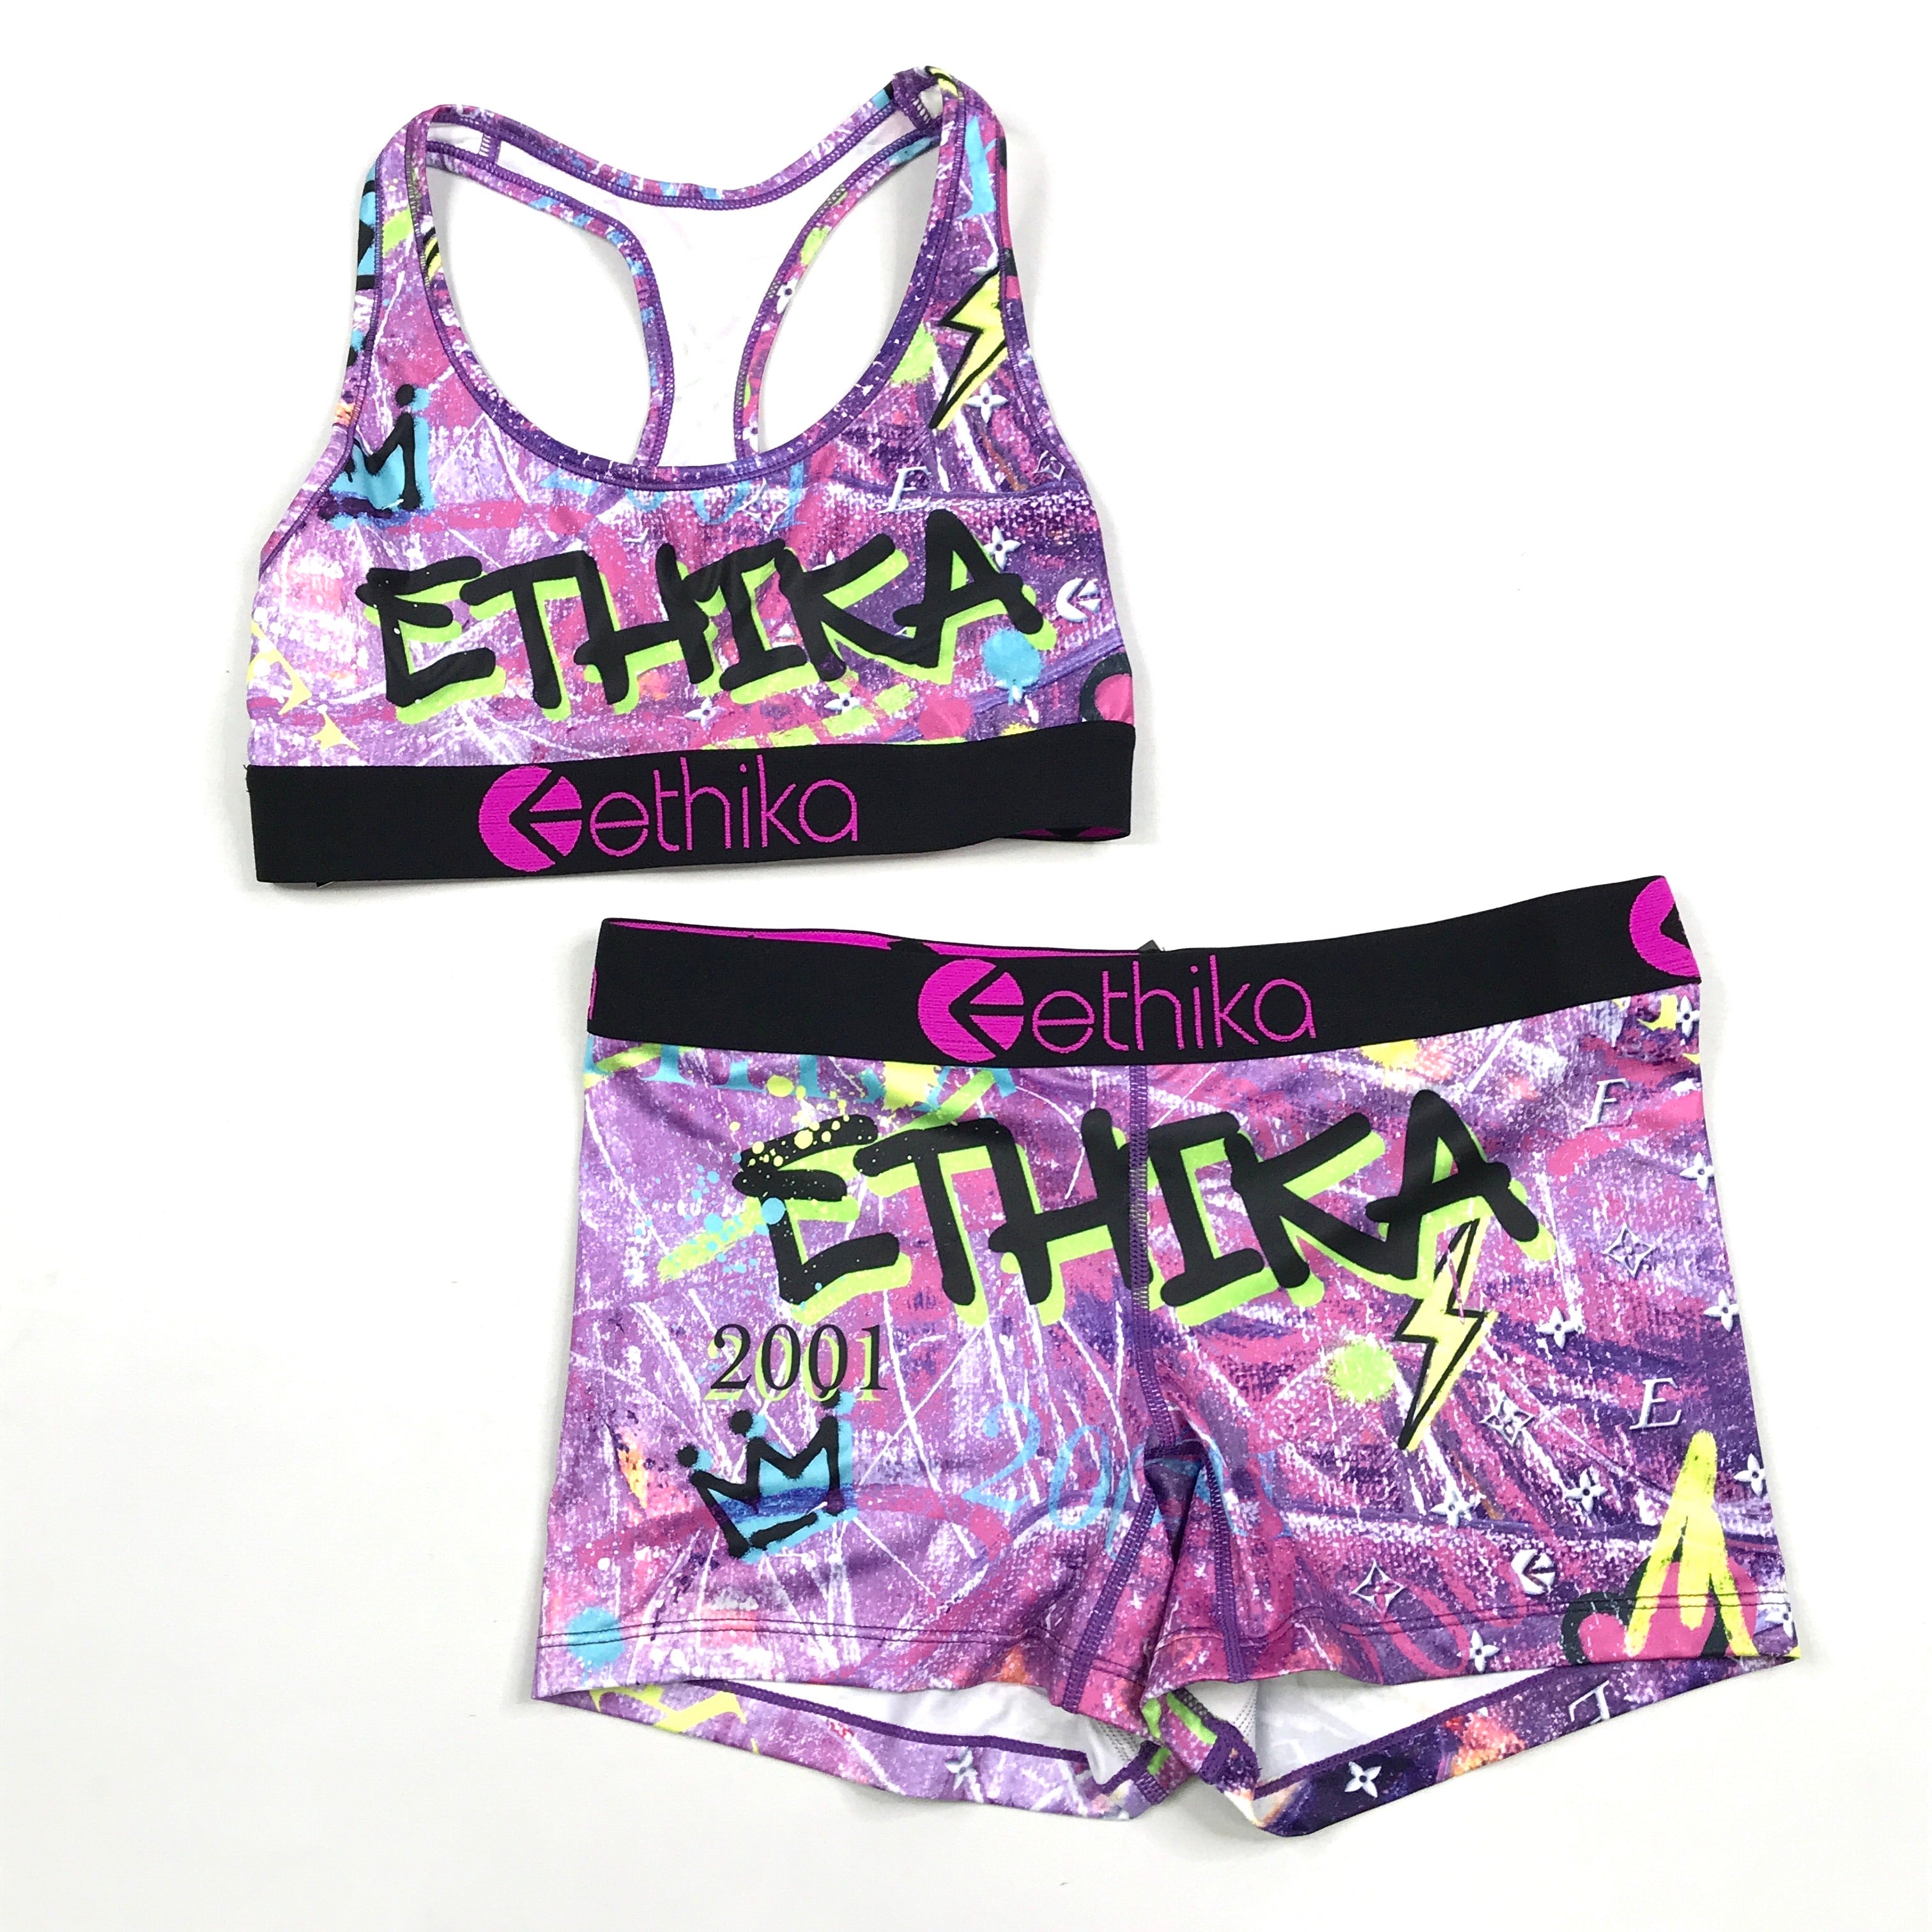 Ethika Staple boxer brief and sports bra set in Lady Graffiti